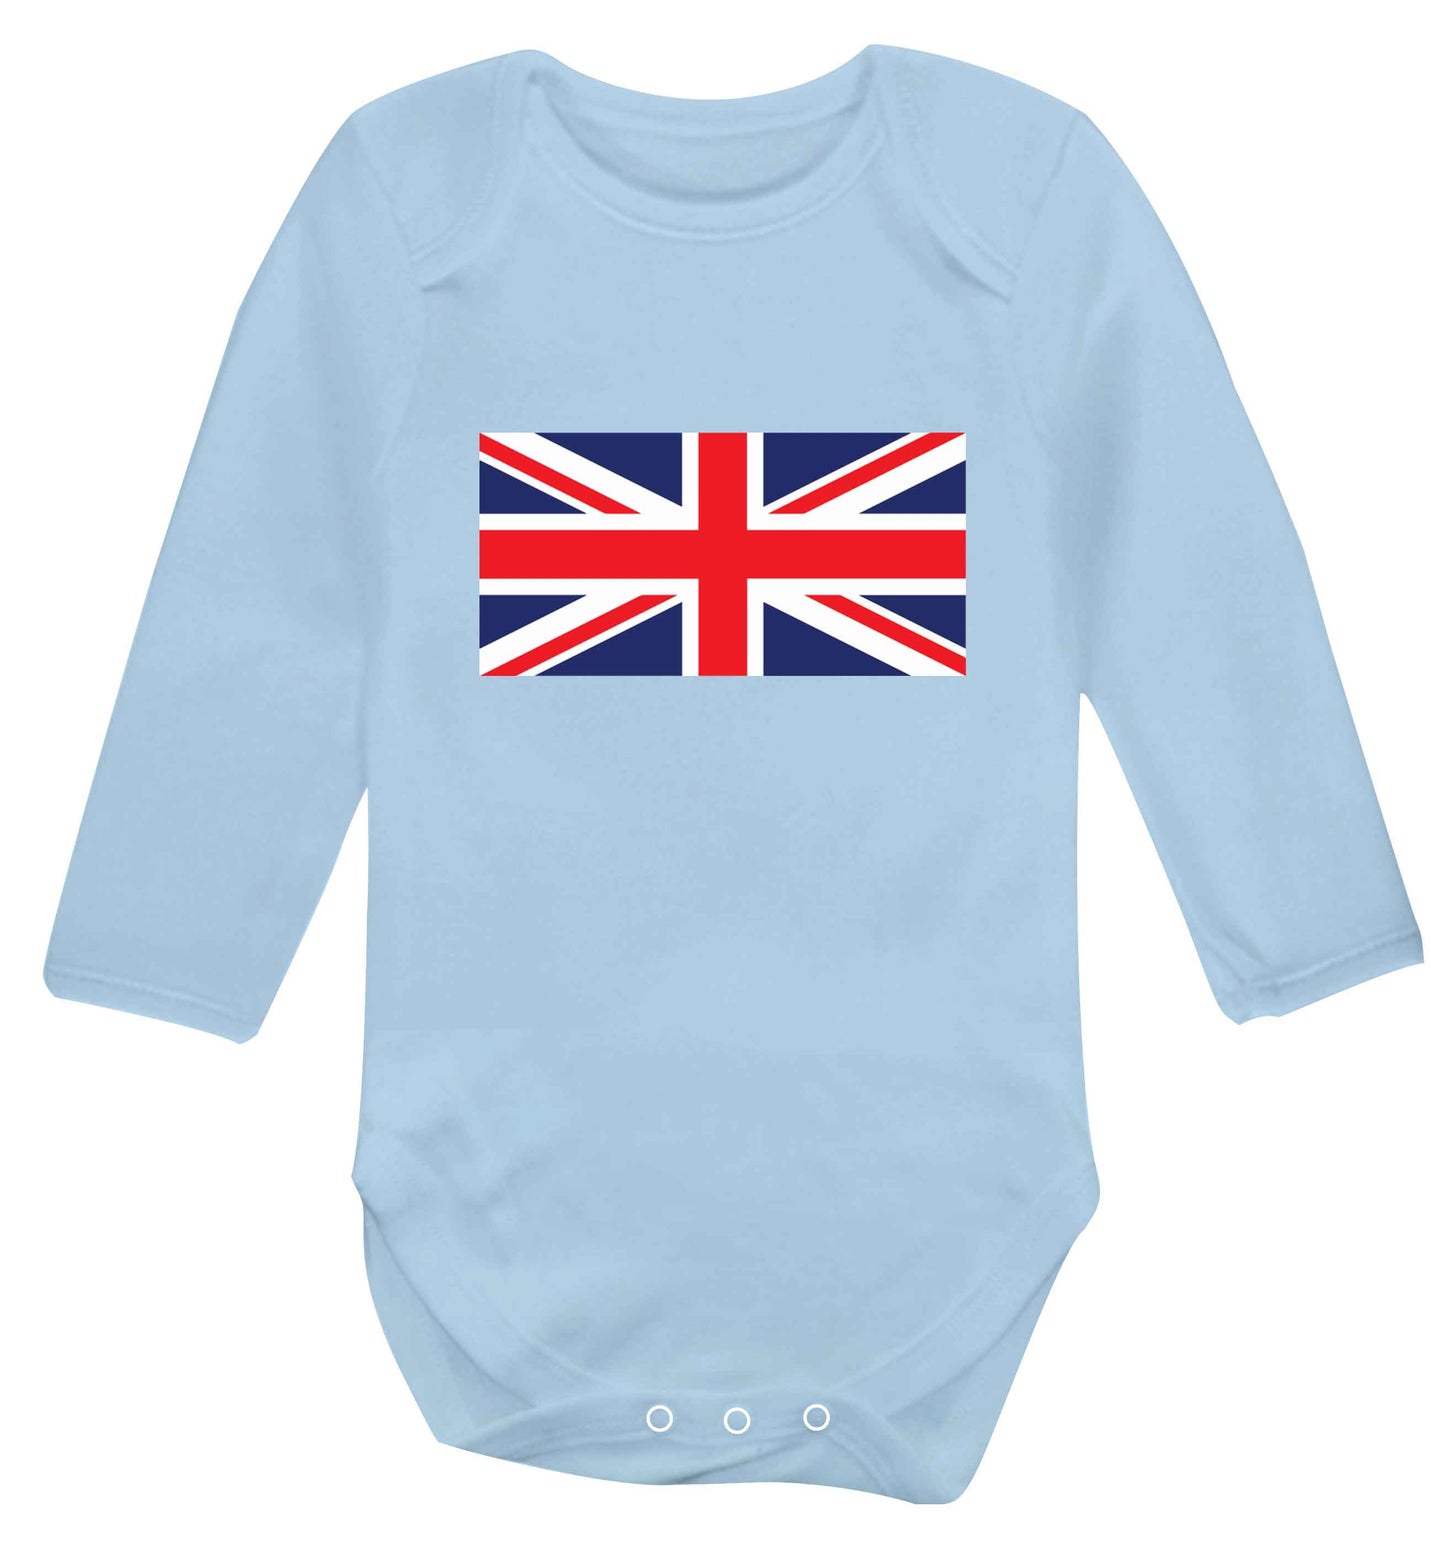 Union Jack baby vest long sleeved pale blue 6-12 months